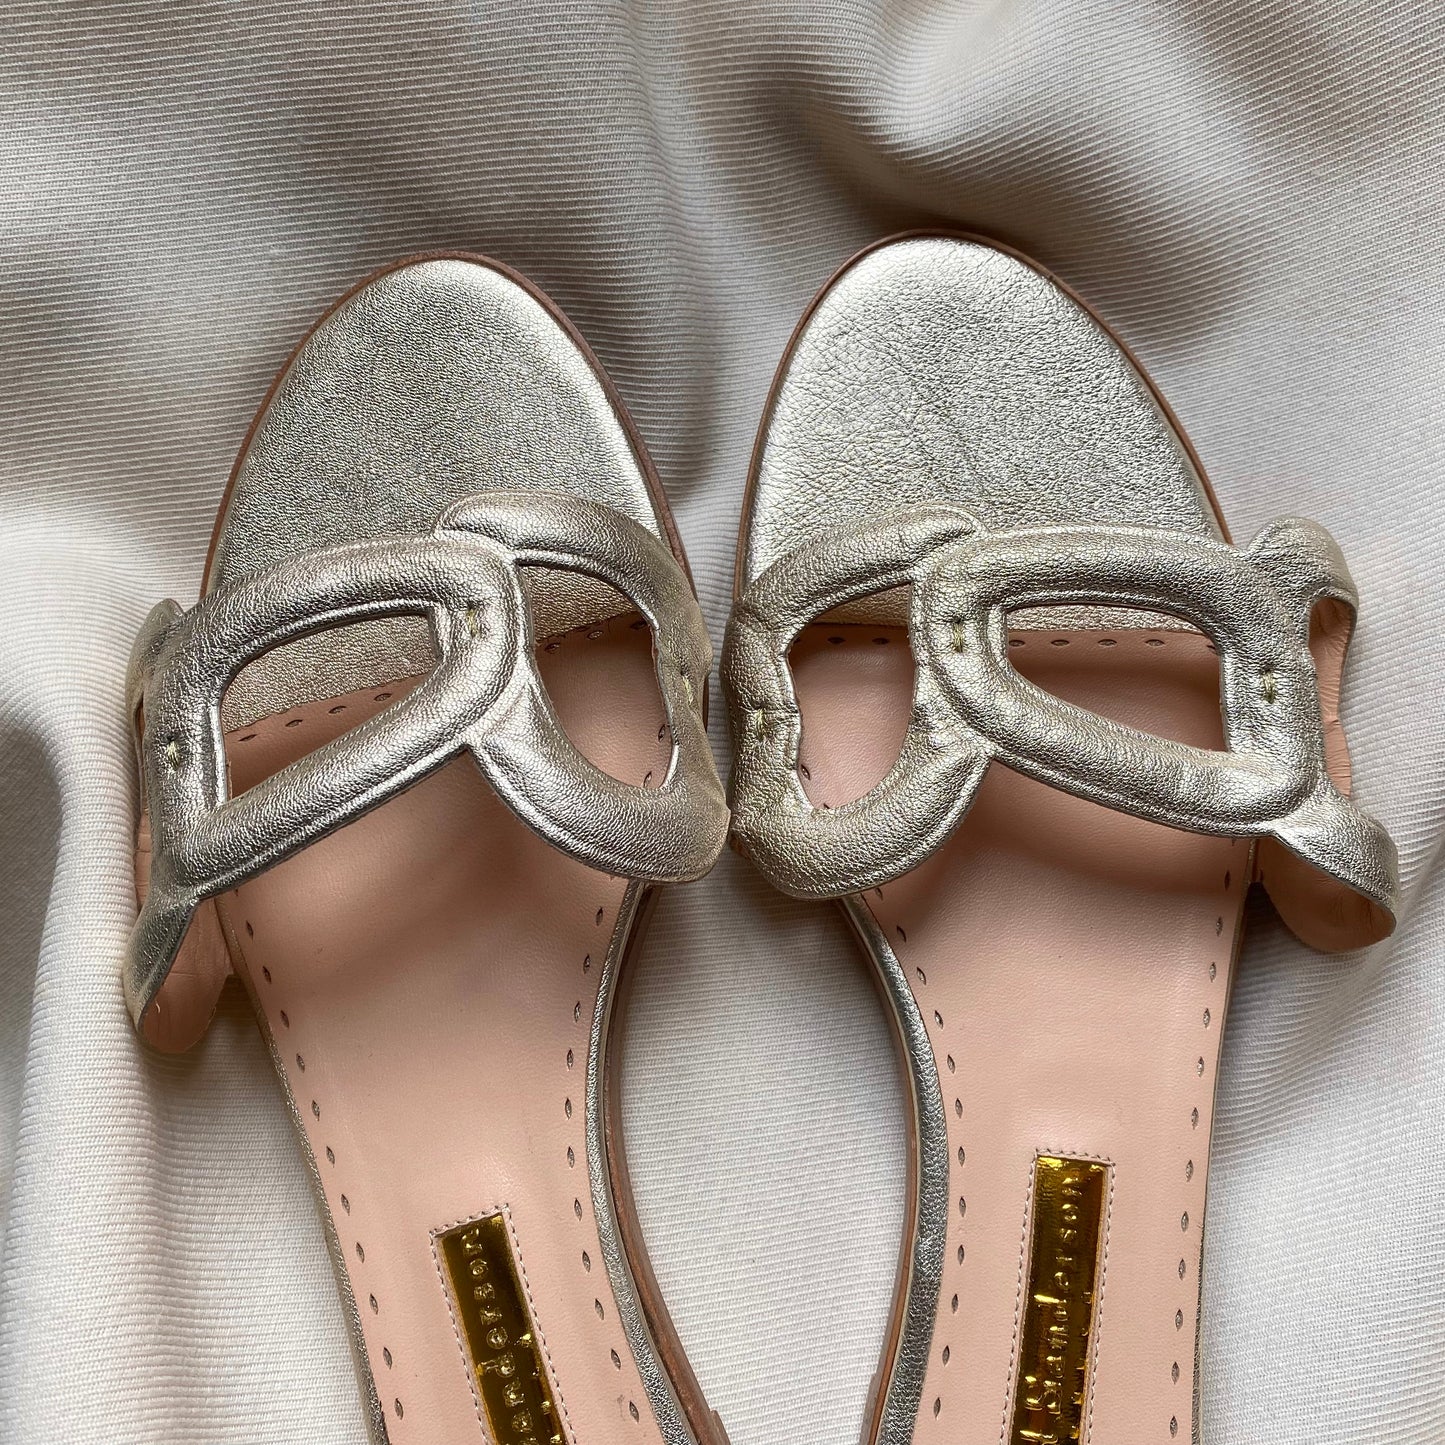 Rupert Sanderson gold “emblem” strap sandals, size 42. Fits like a size 11.5